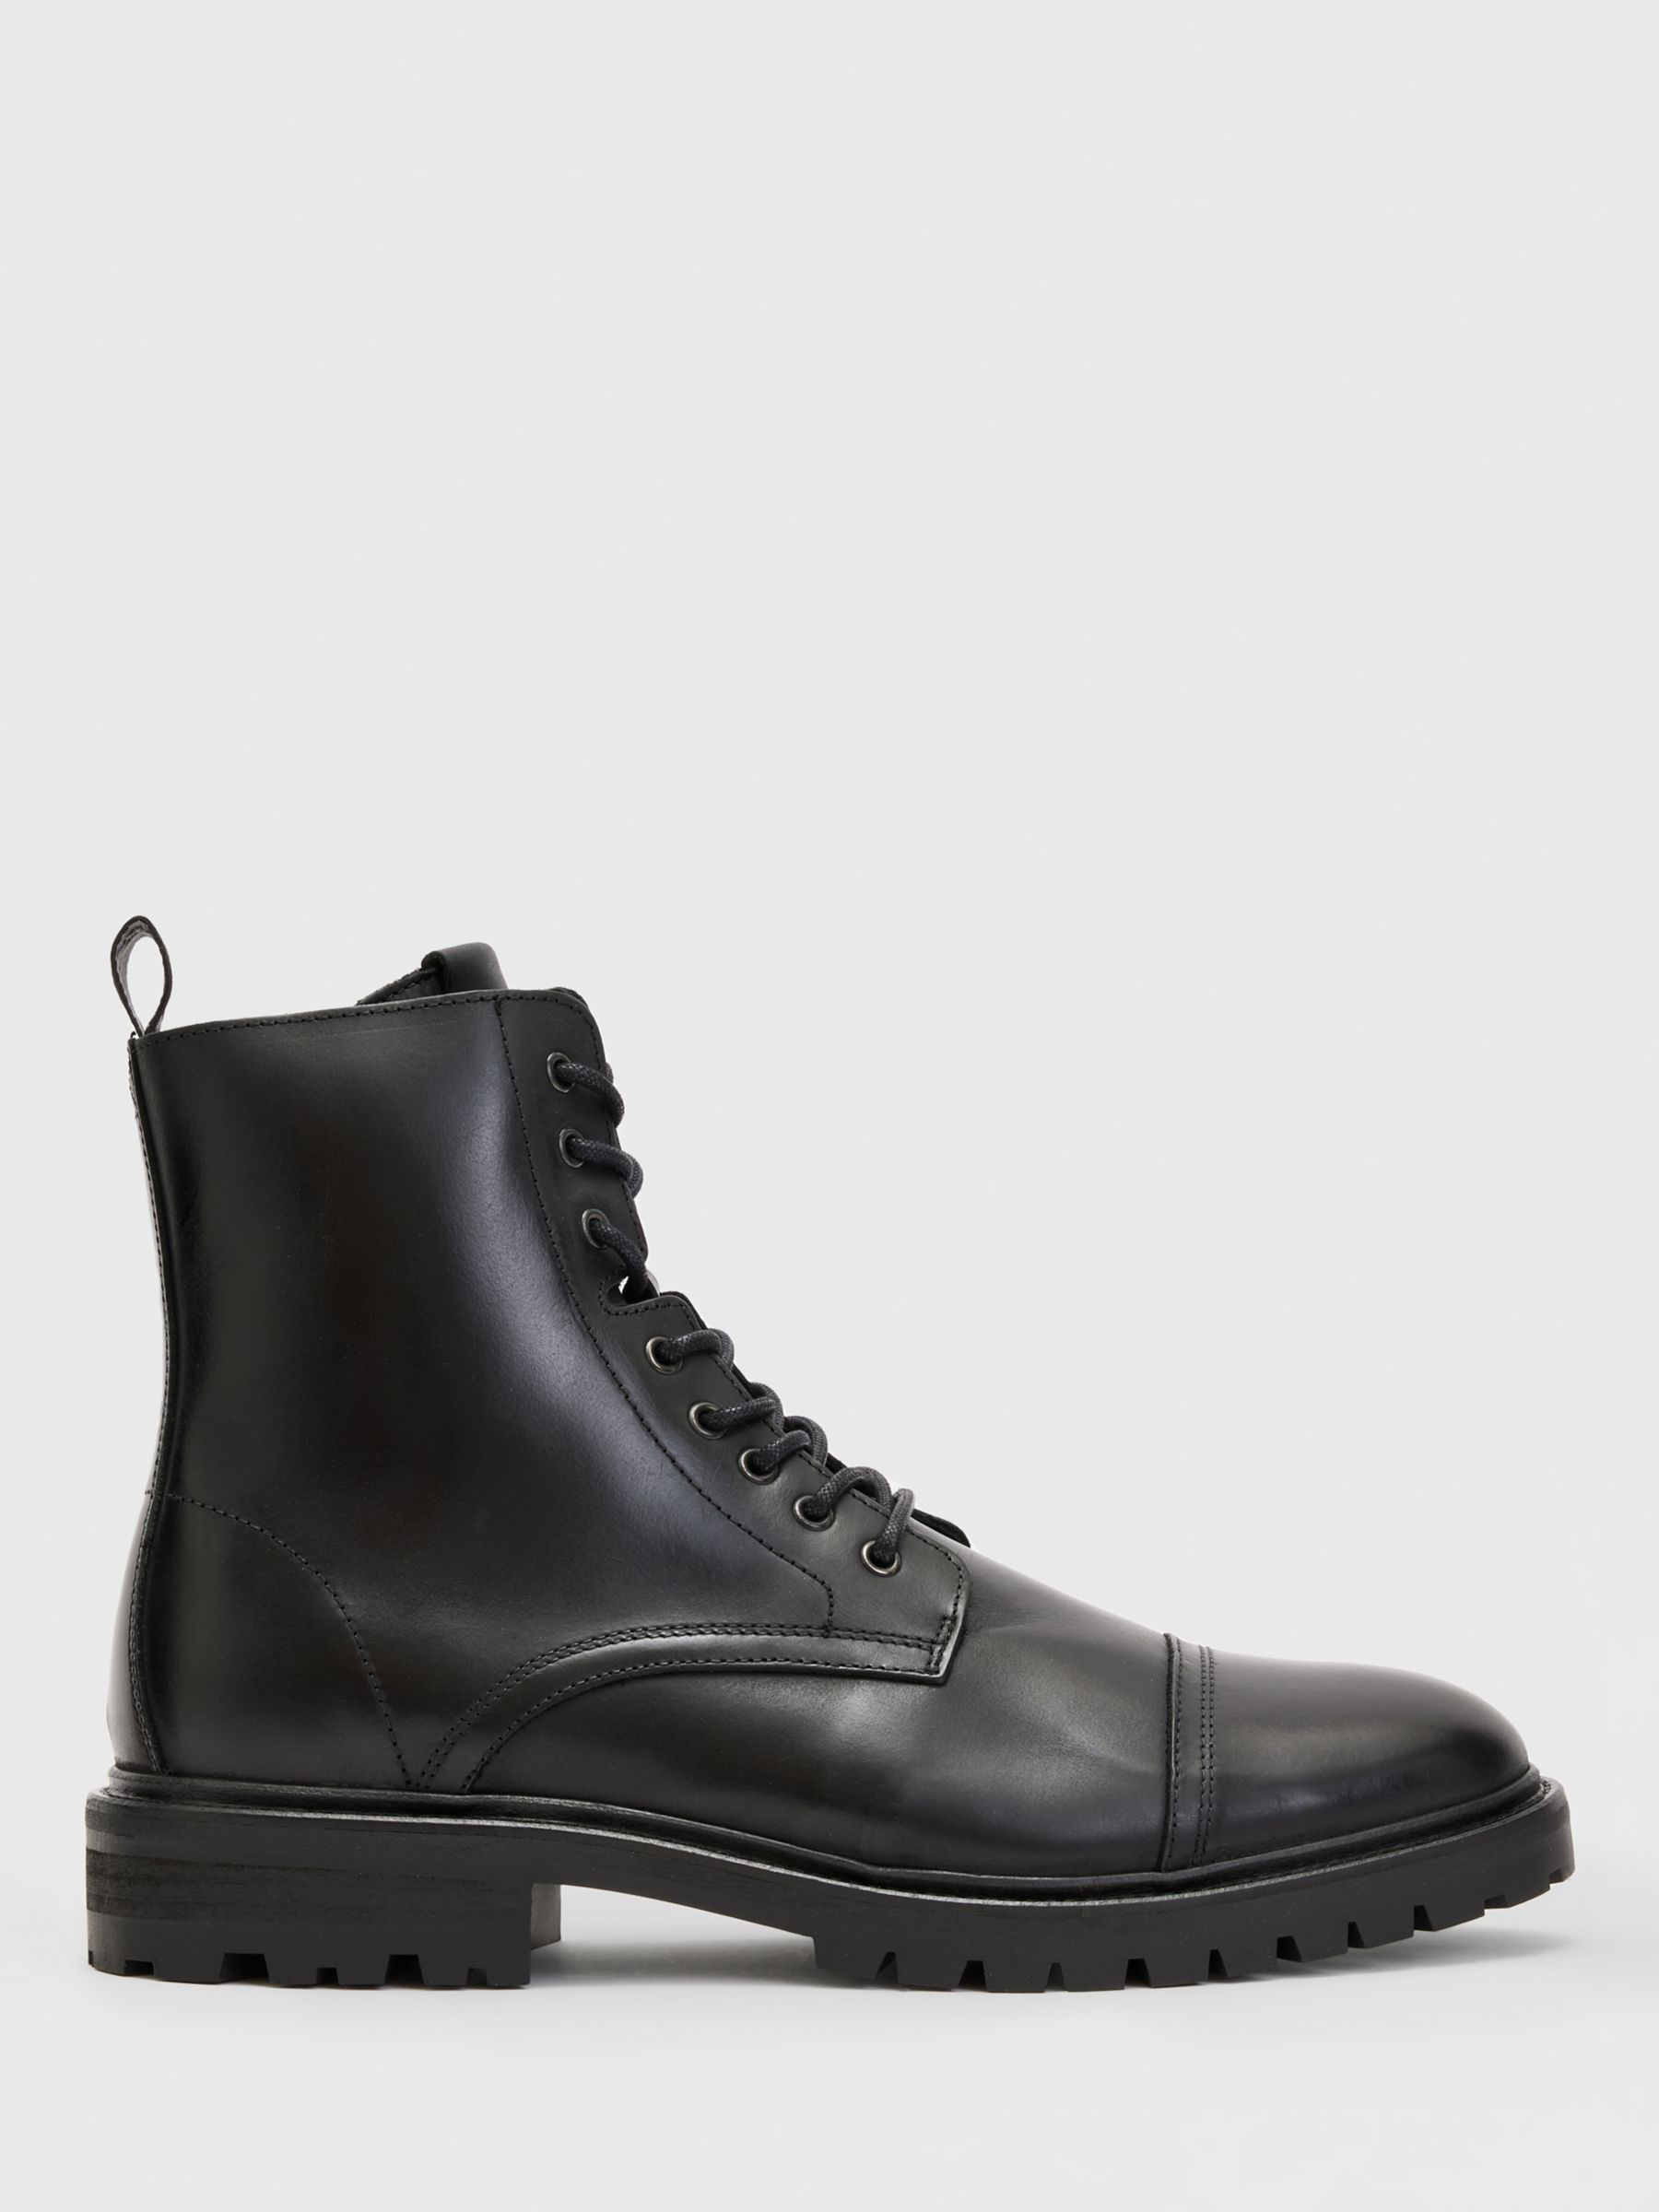 AllSaints Piero Leather Lace Up Military Boots, Black at John Lewis ...